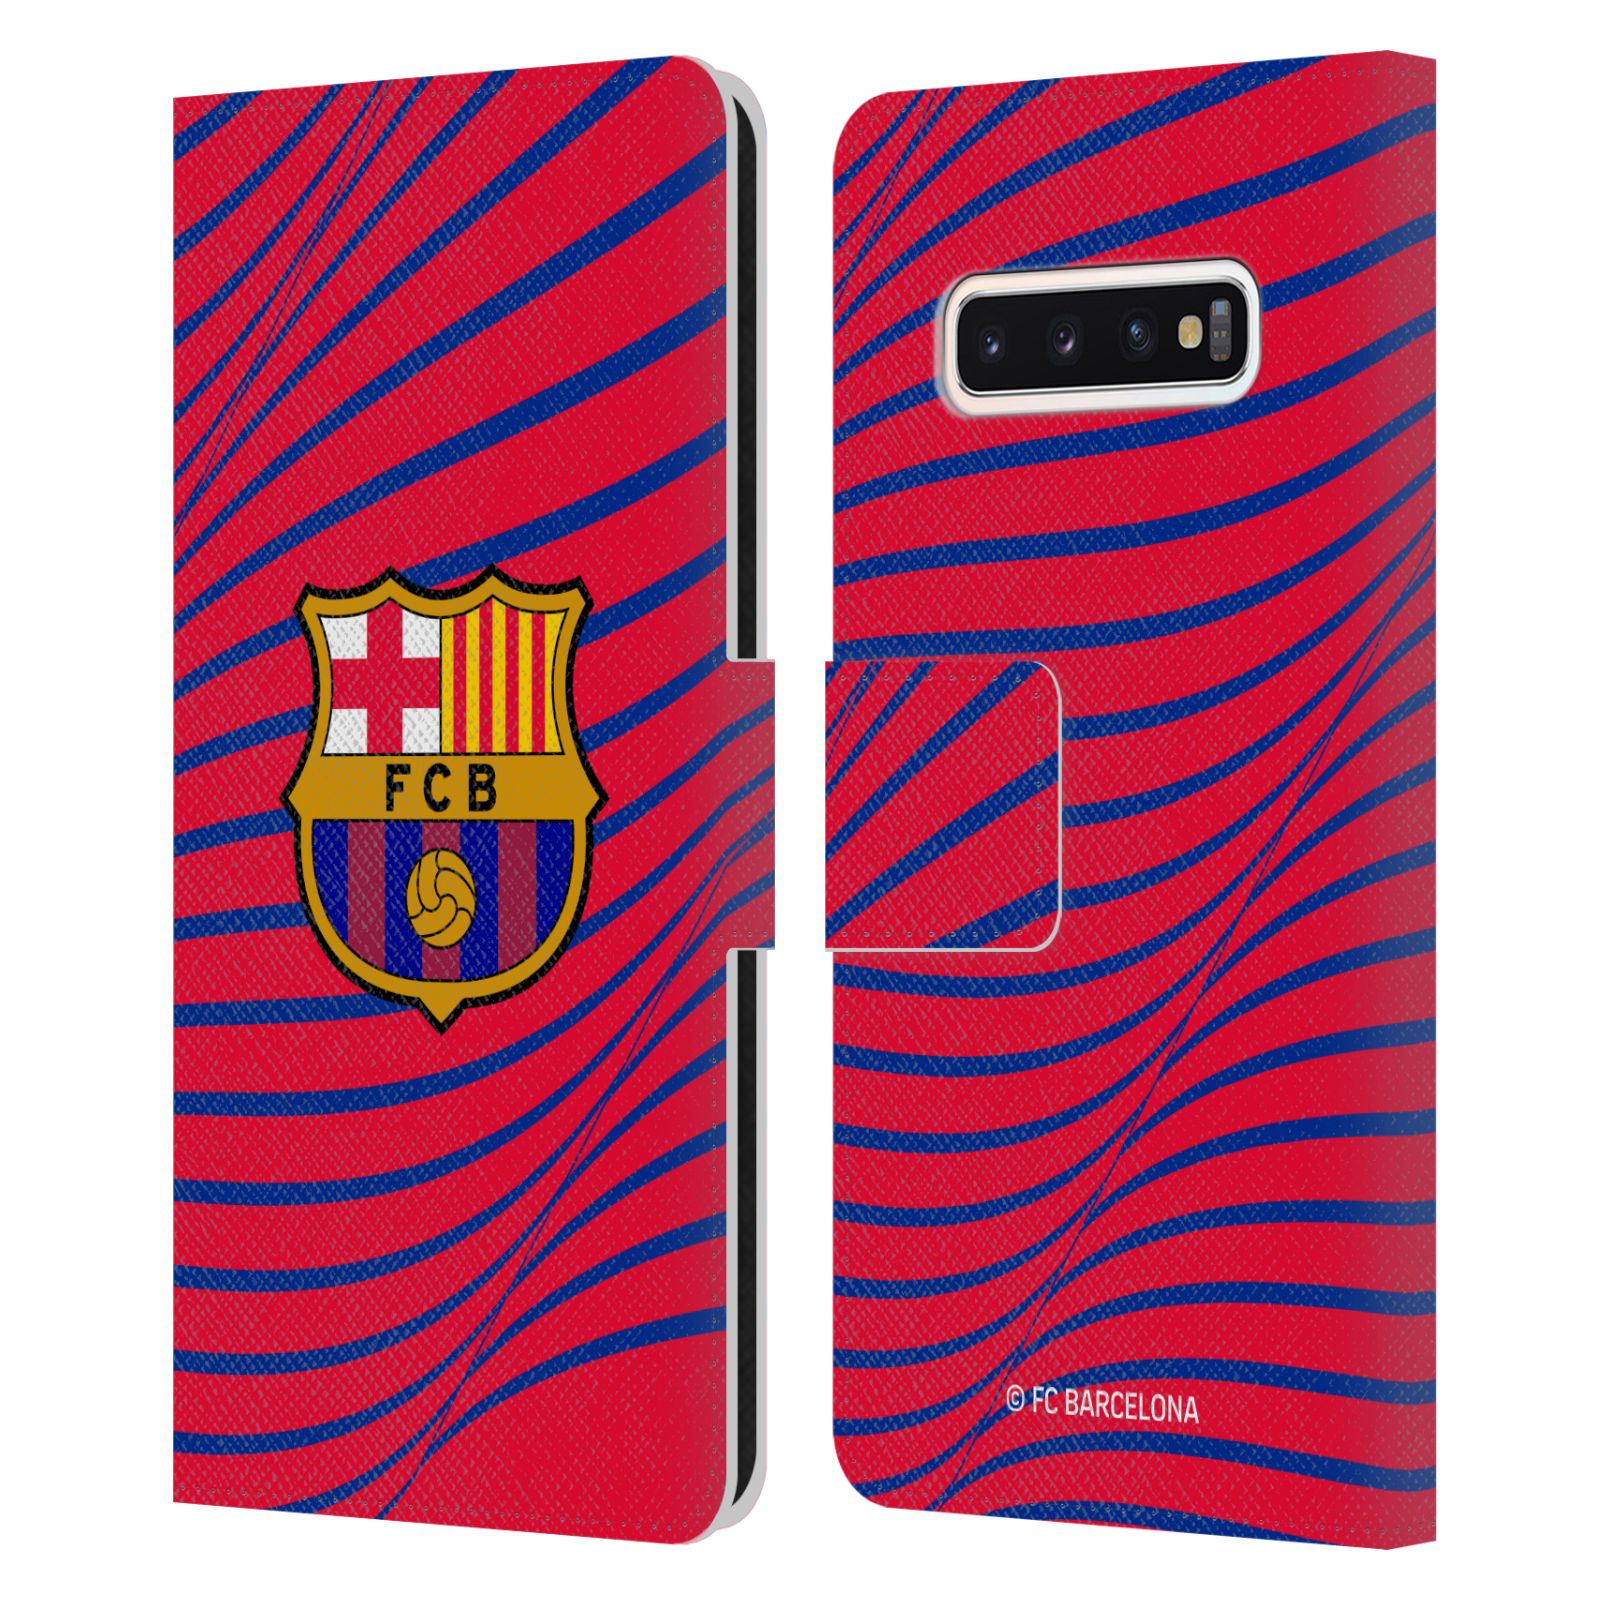 Pouzdro na mobil Samsung Galaxy S10 - HEAD CASE - FC Barcelona - Grafická textura logo